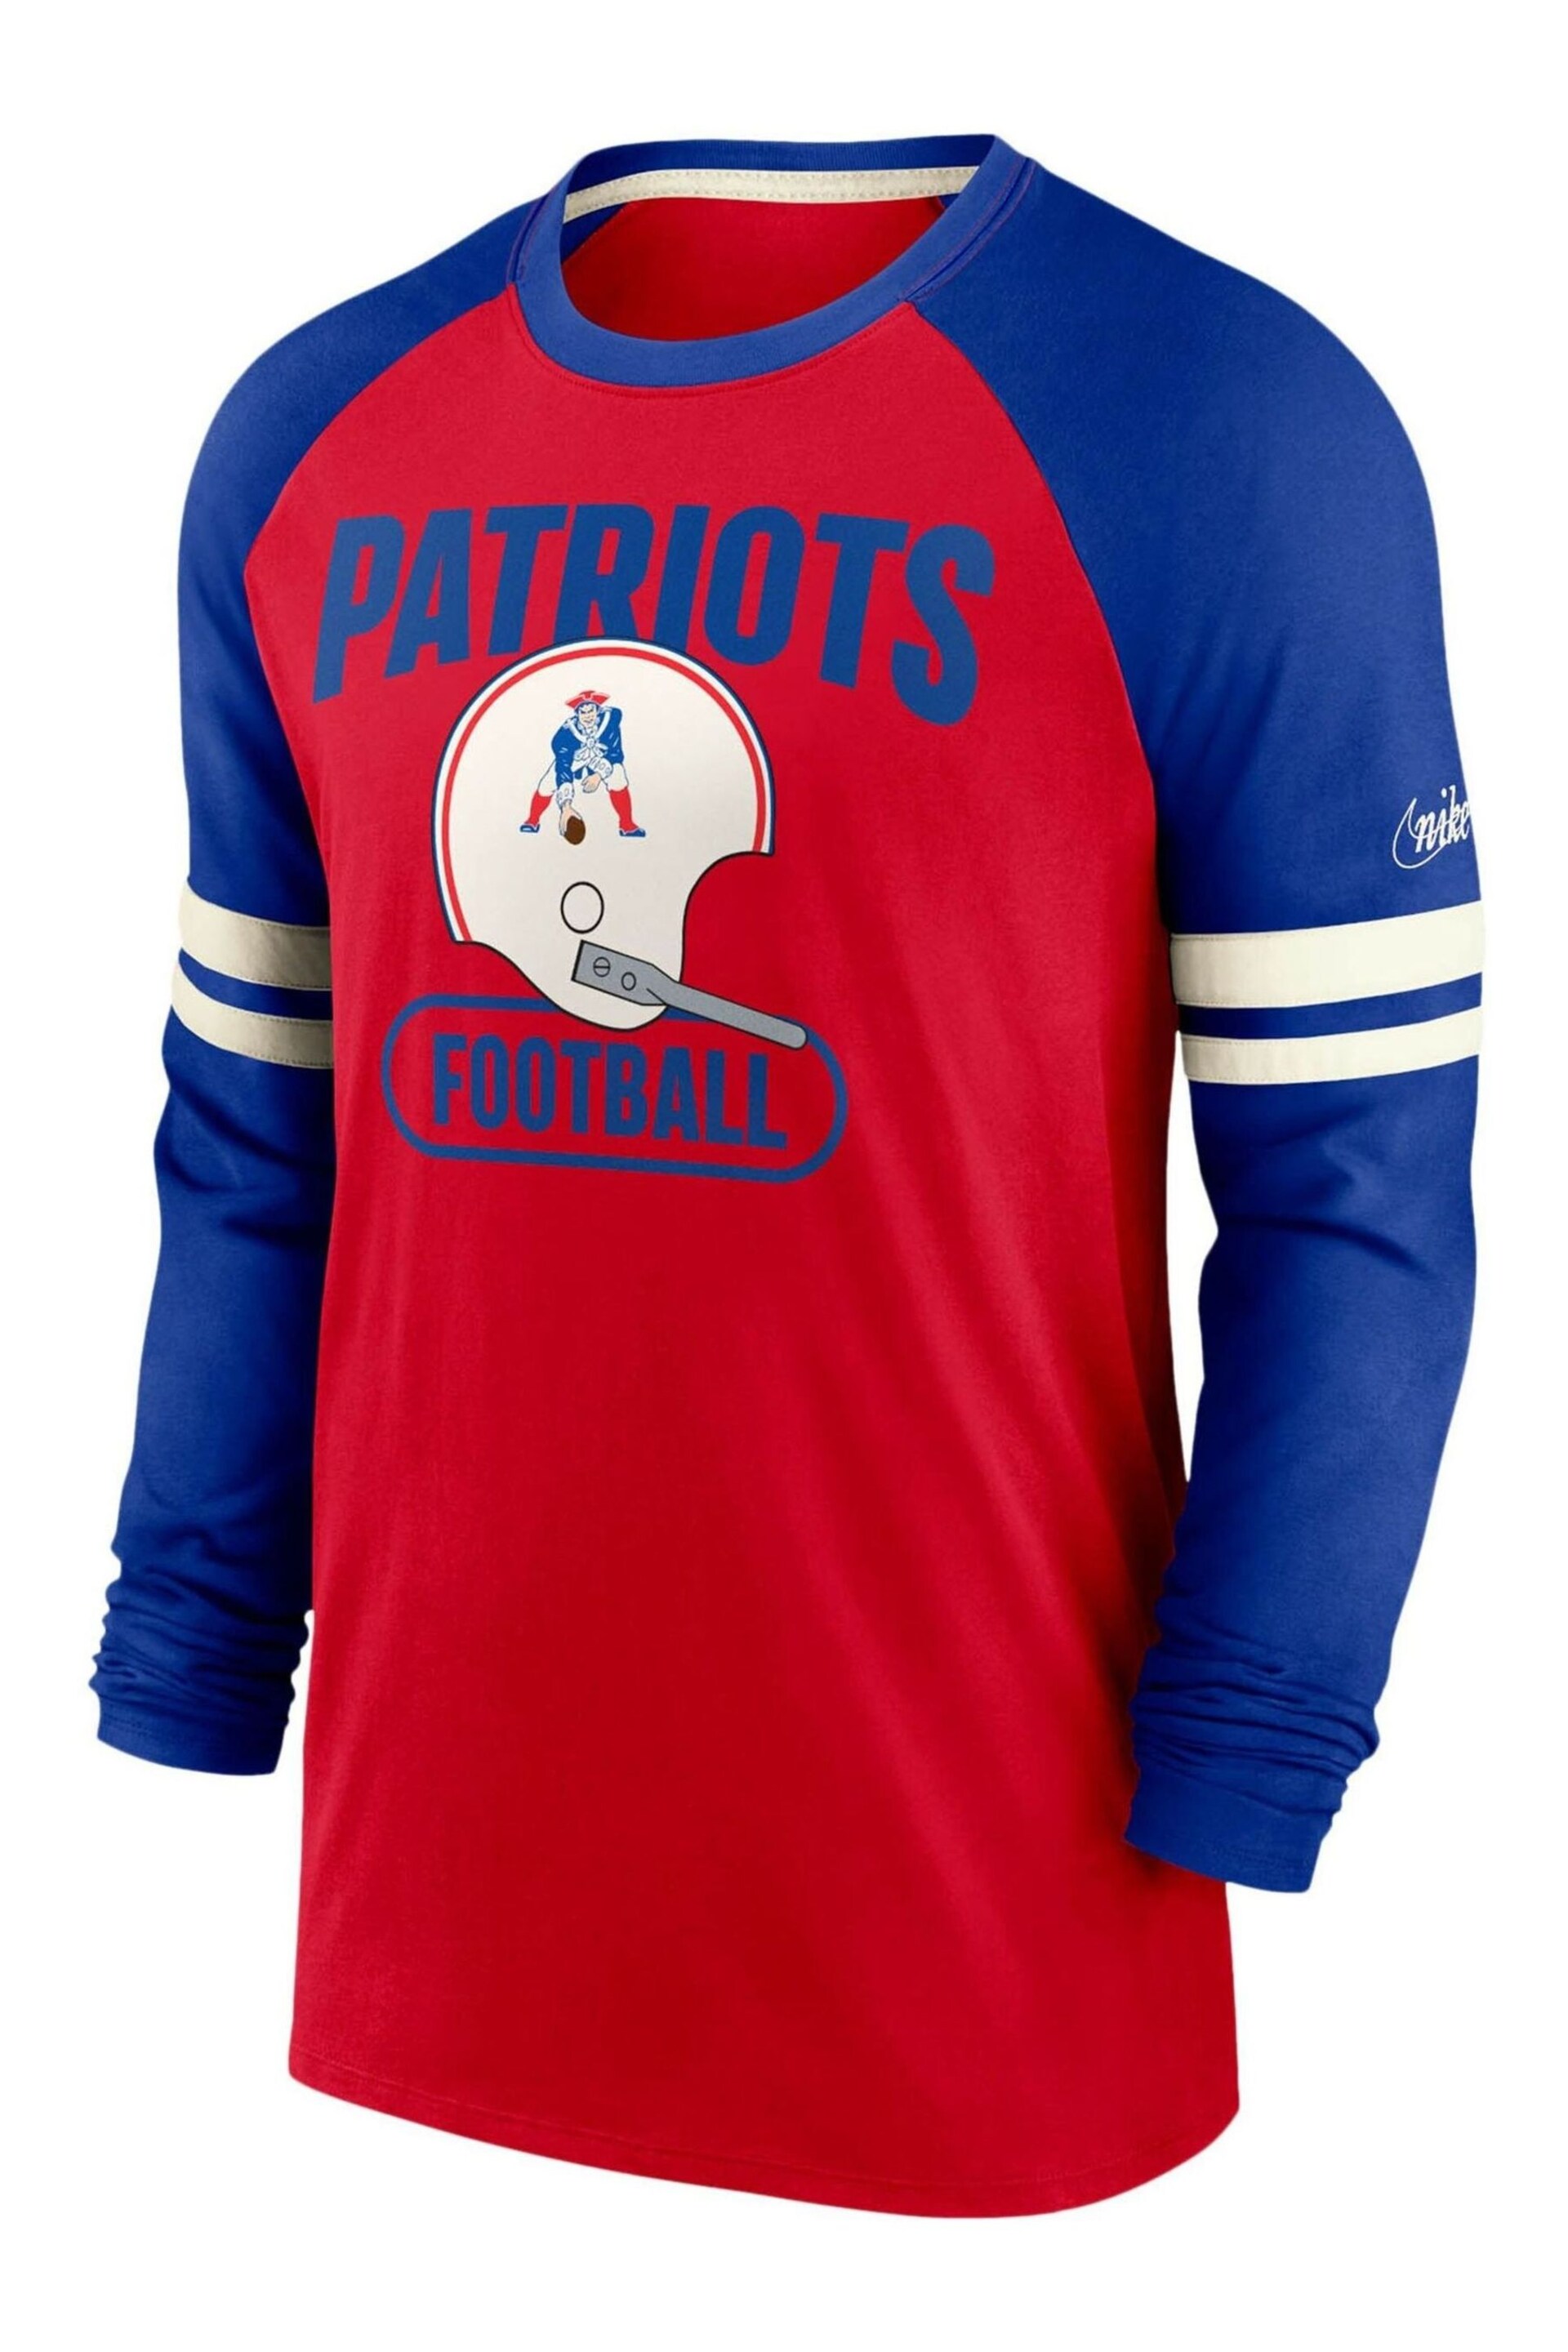 Nike Red NFL Fanatics New England Patriots Dri-FIT Cotton Long Sleeve Raglan T-Shirt - Image 2 of 3